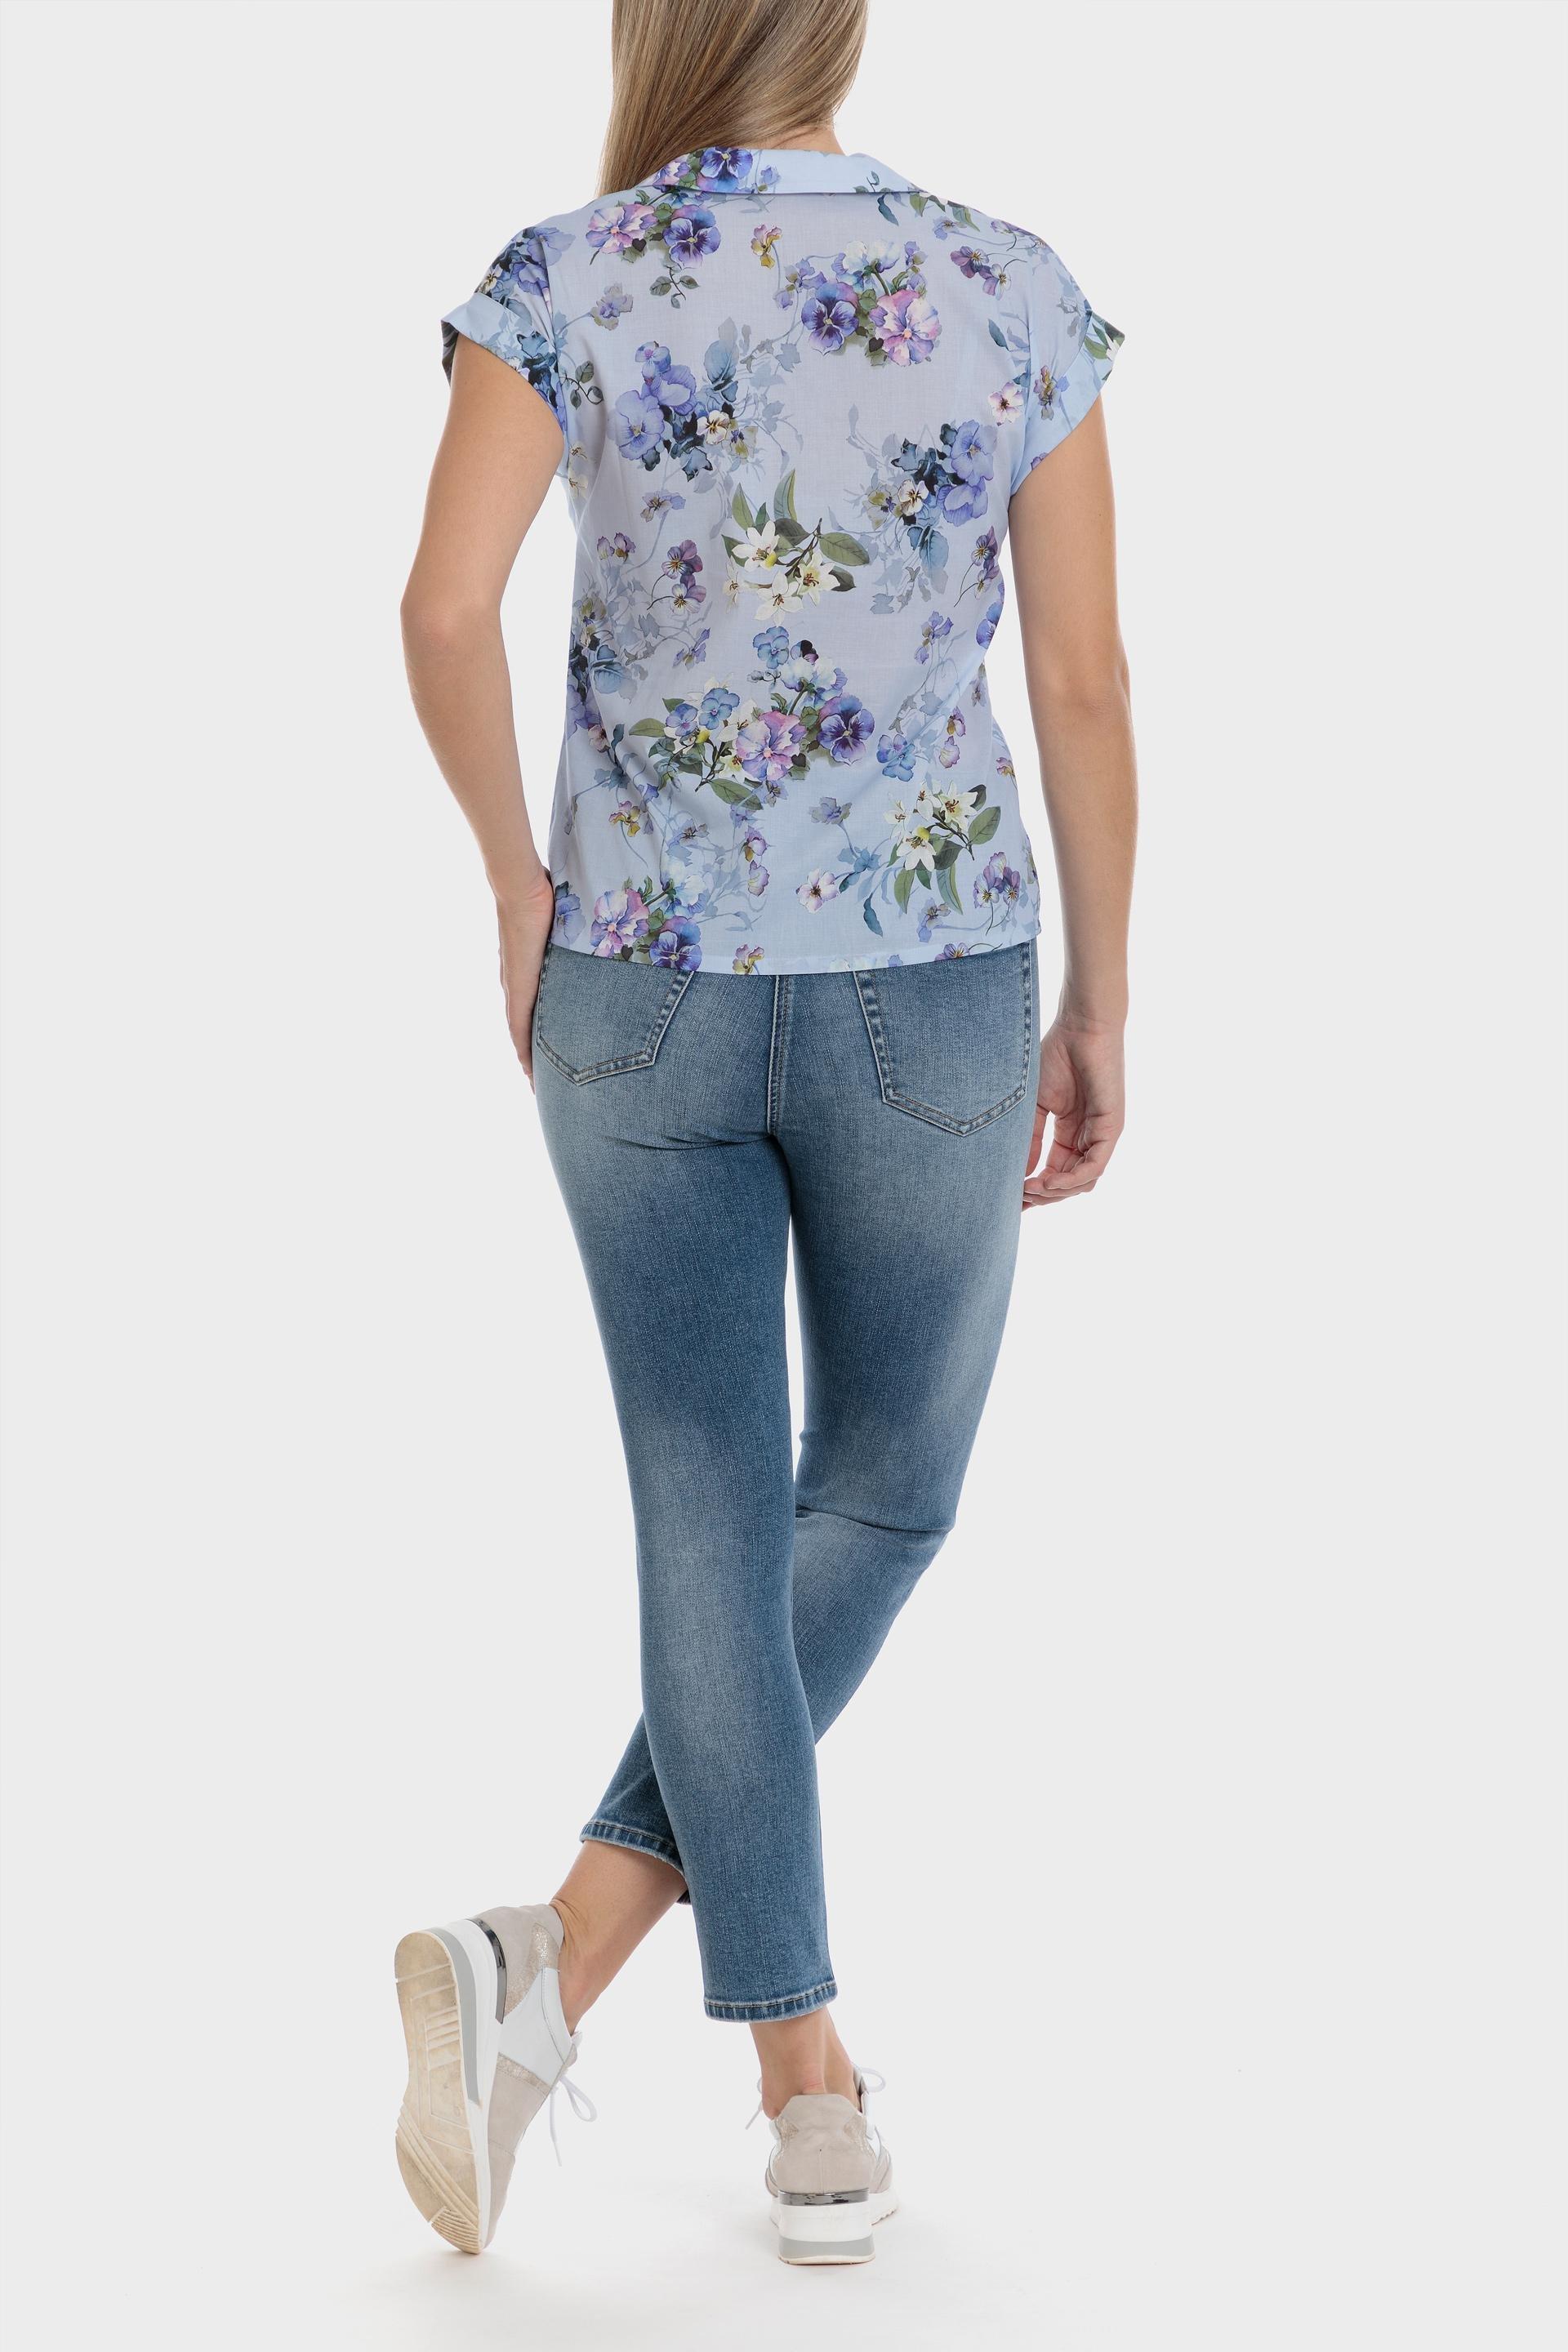 Punt Roma - Blue Floral Print Shirt